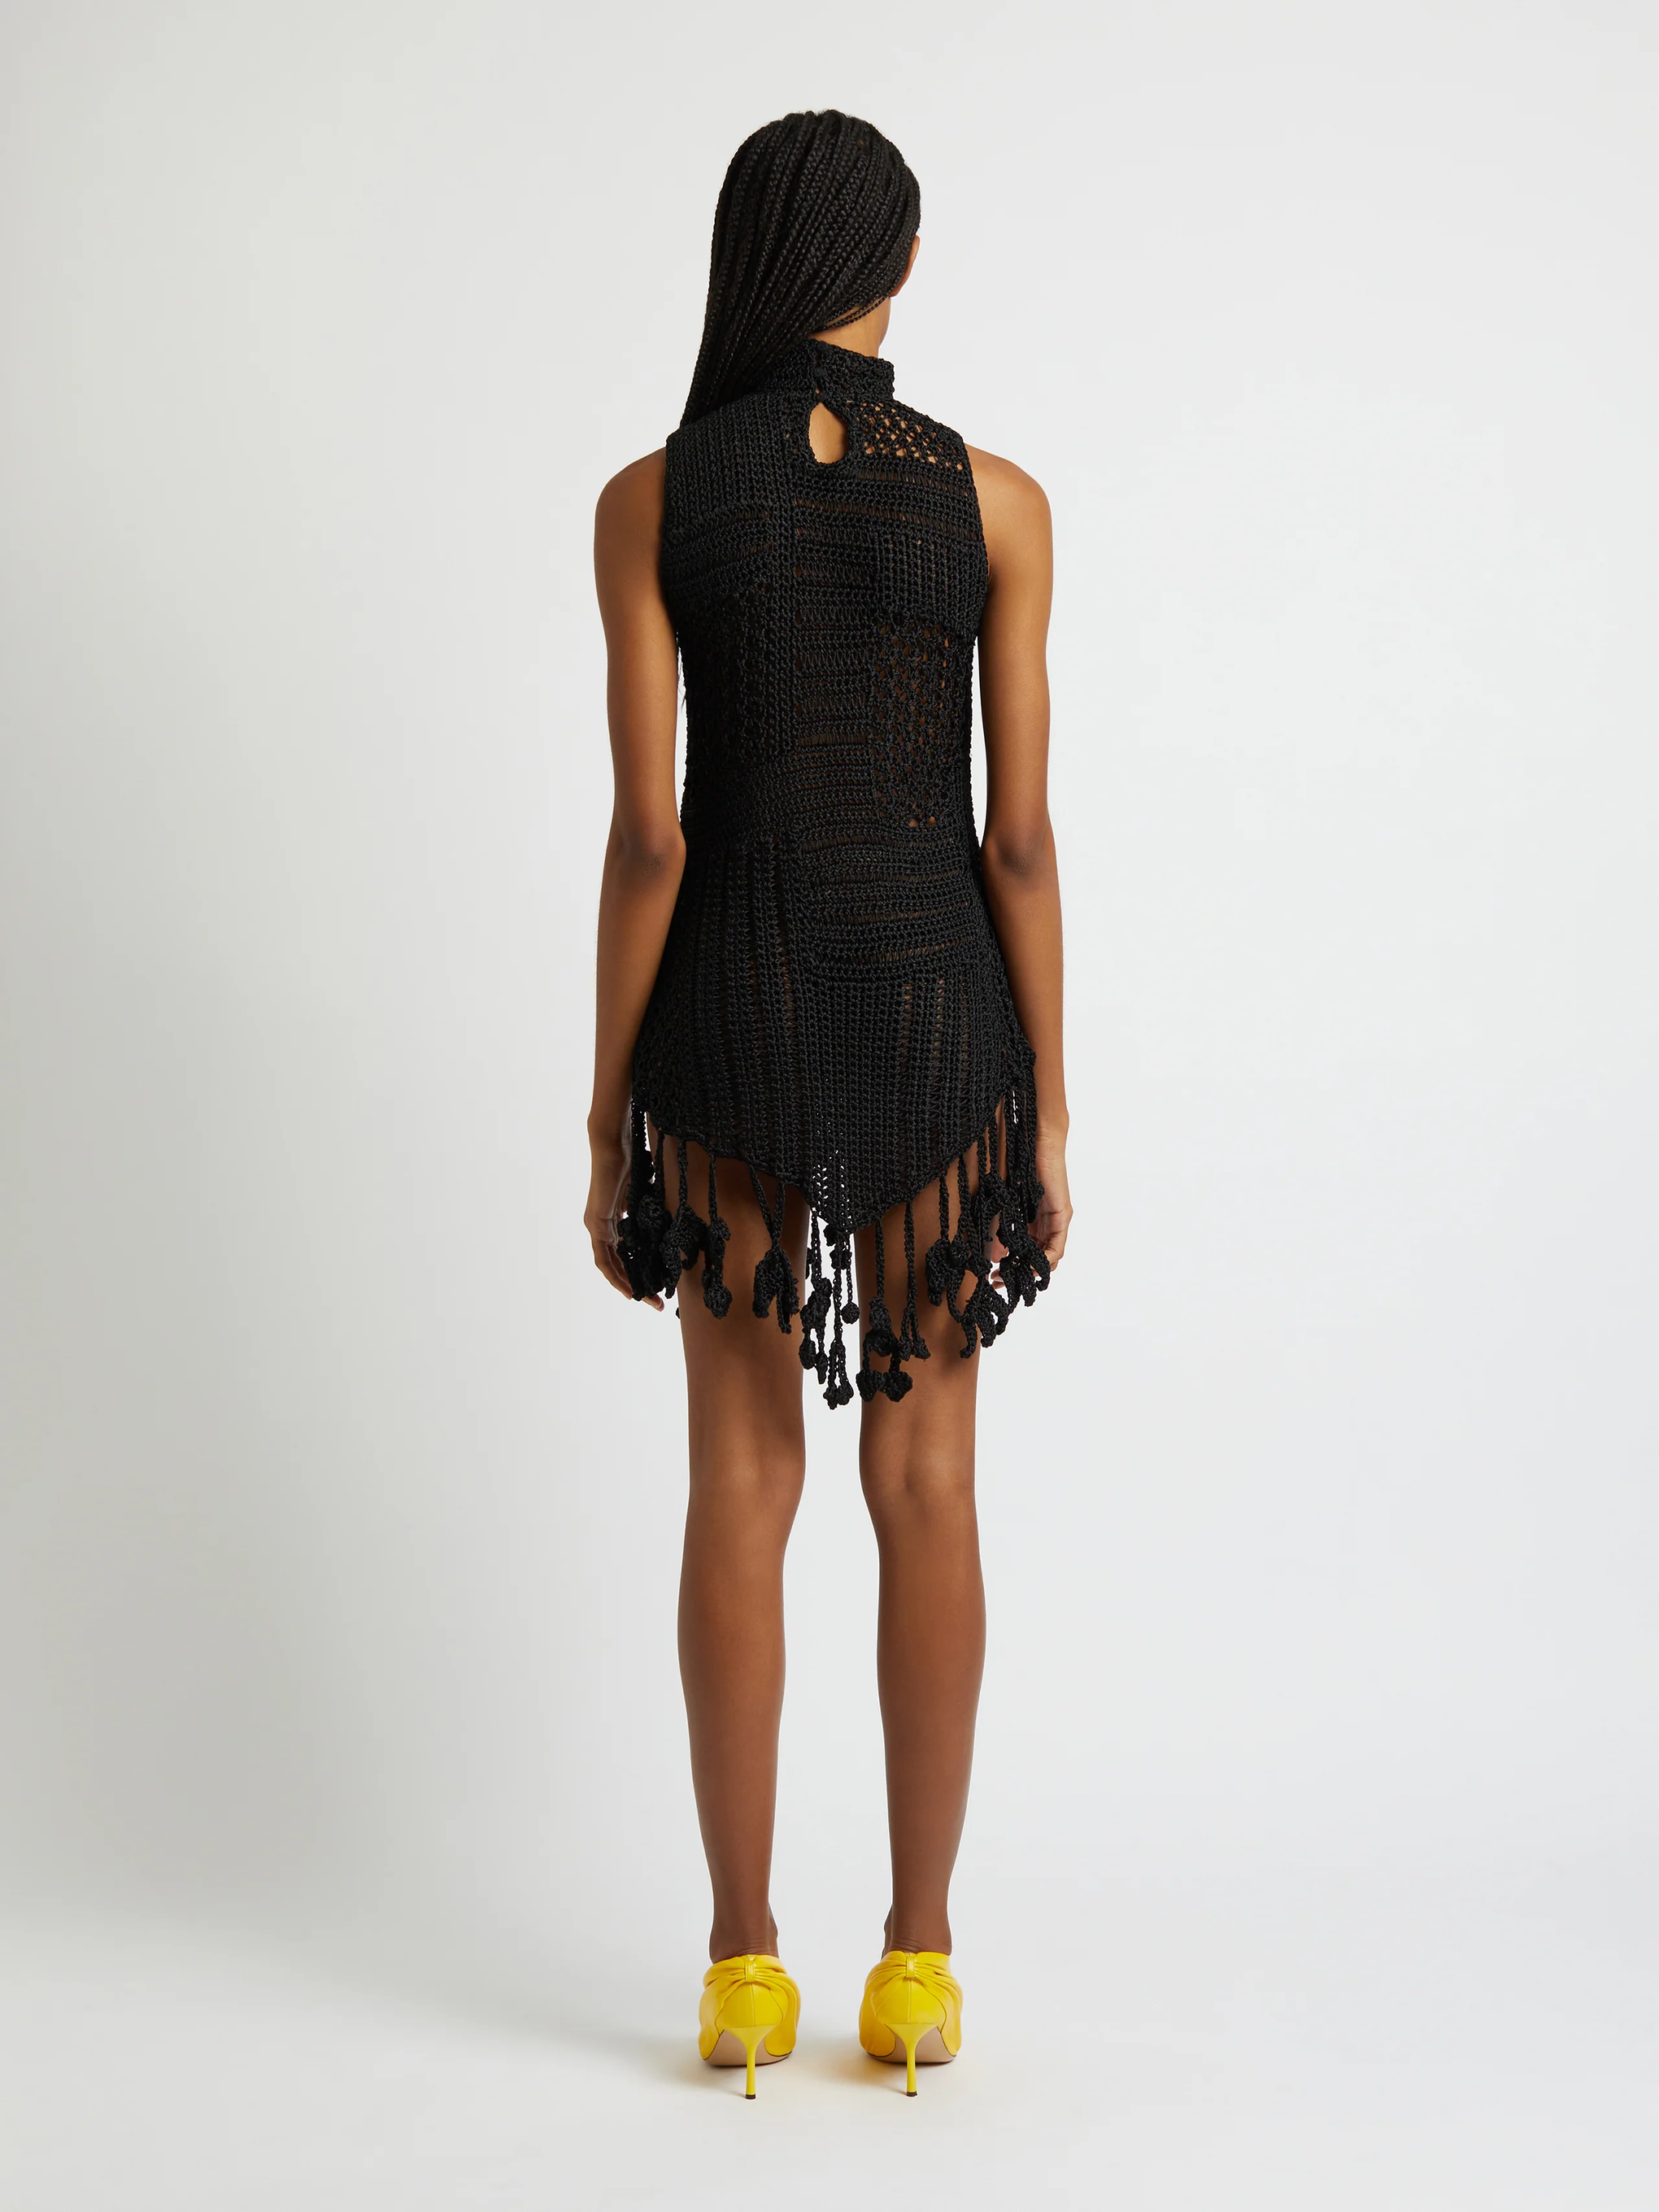 Christopher Esber Ramener Rope Handknitted dress in Black available at The New Trend Australia.